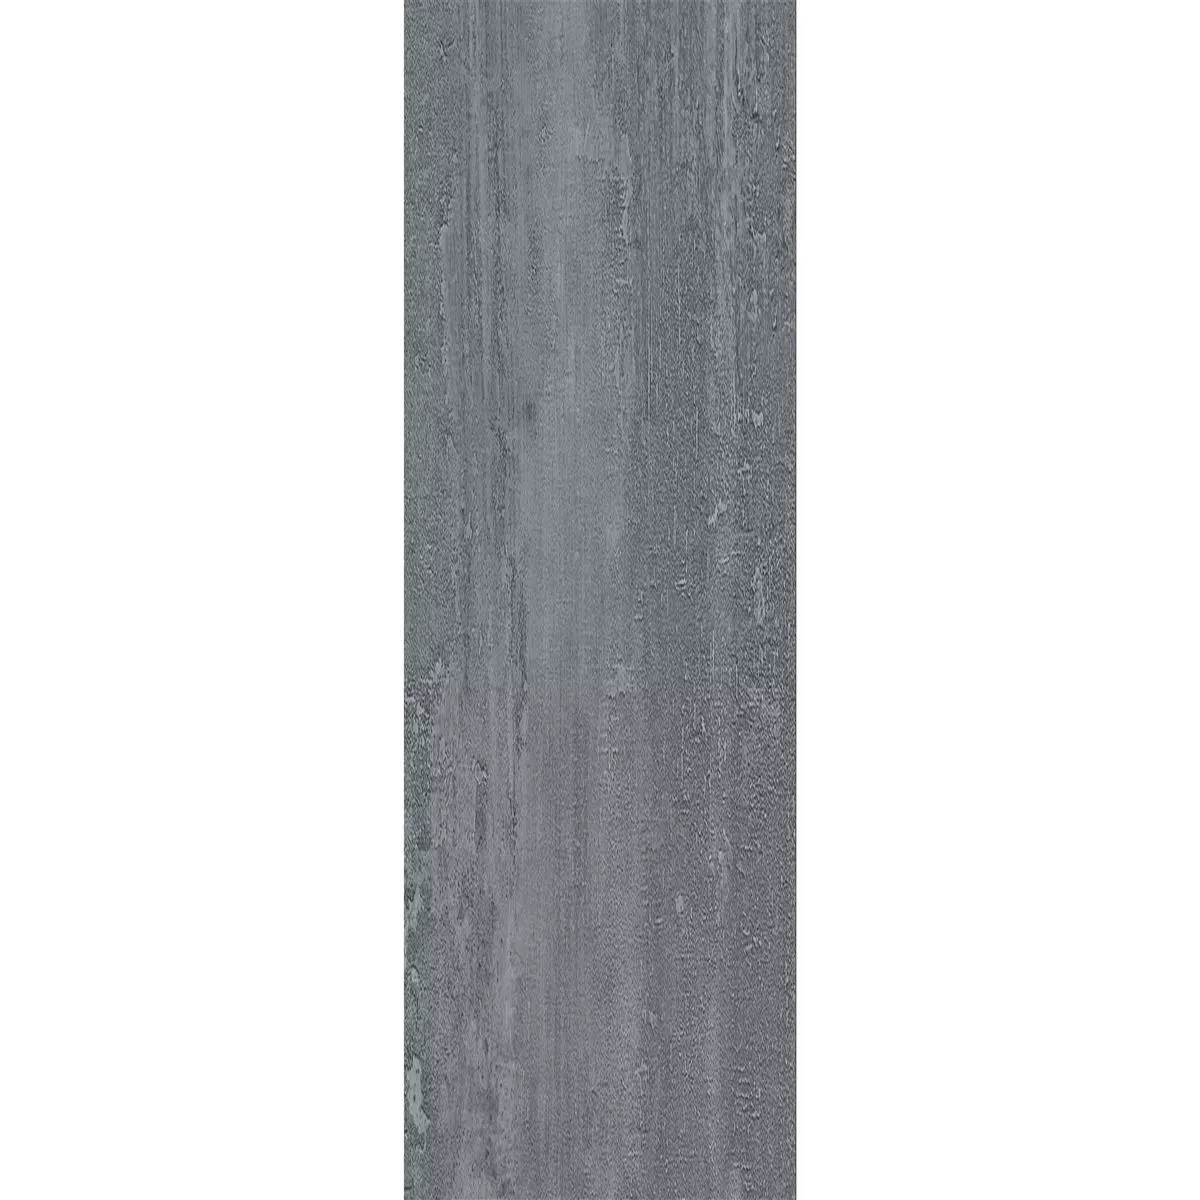 Vinylboden Klicksystem Gandia Hellgrau 30x60cm